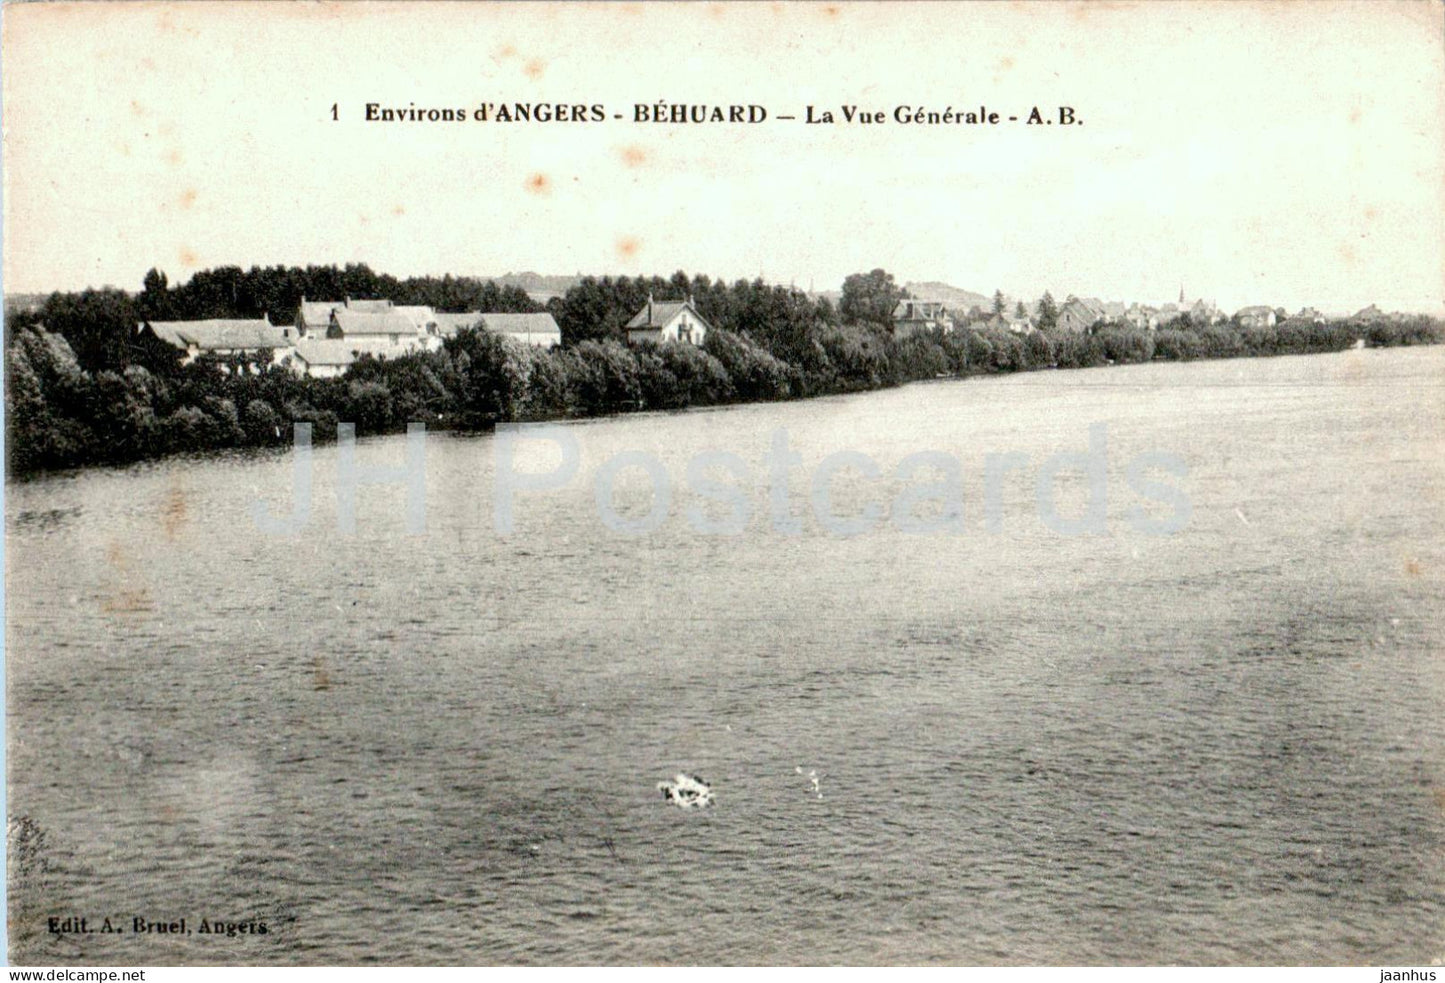 Environs d'Angers - Behuard - La Vue Generale - 1 - old postcard - France - unused - JH Postcards